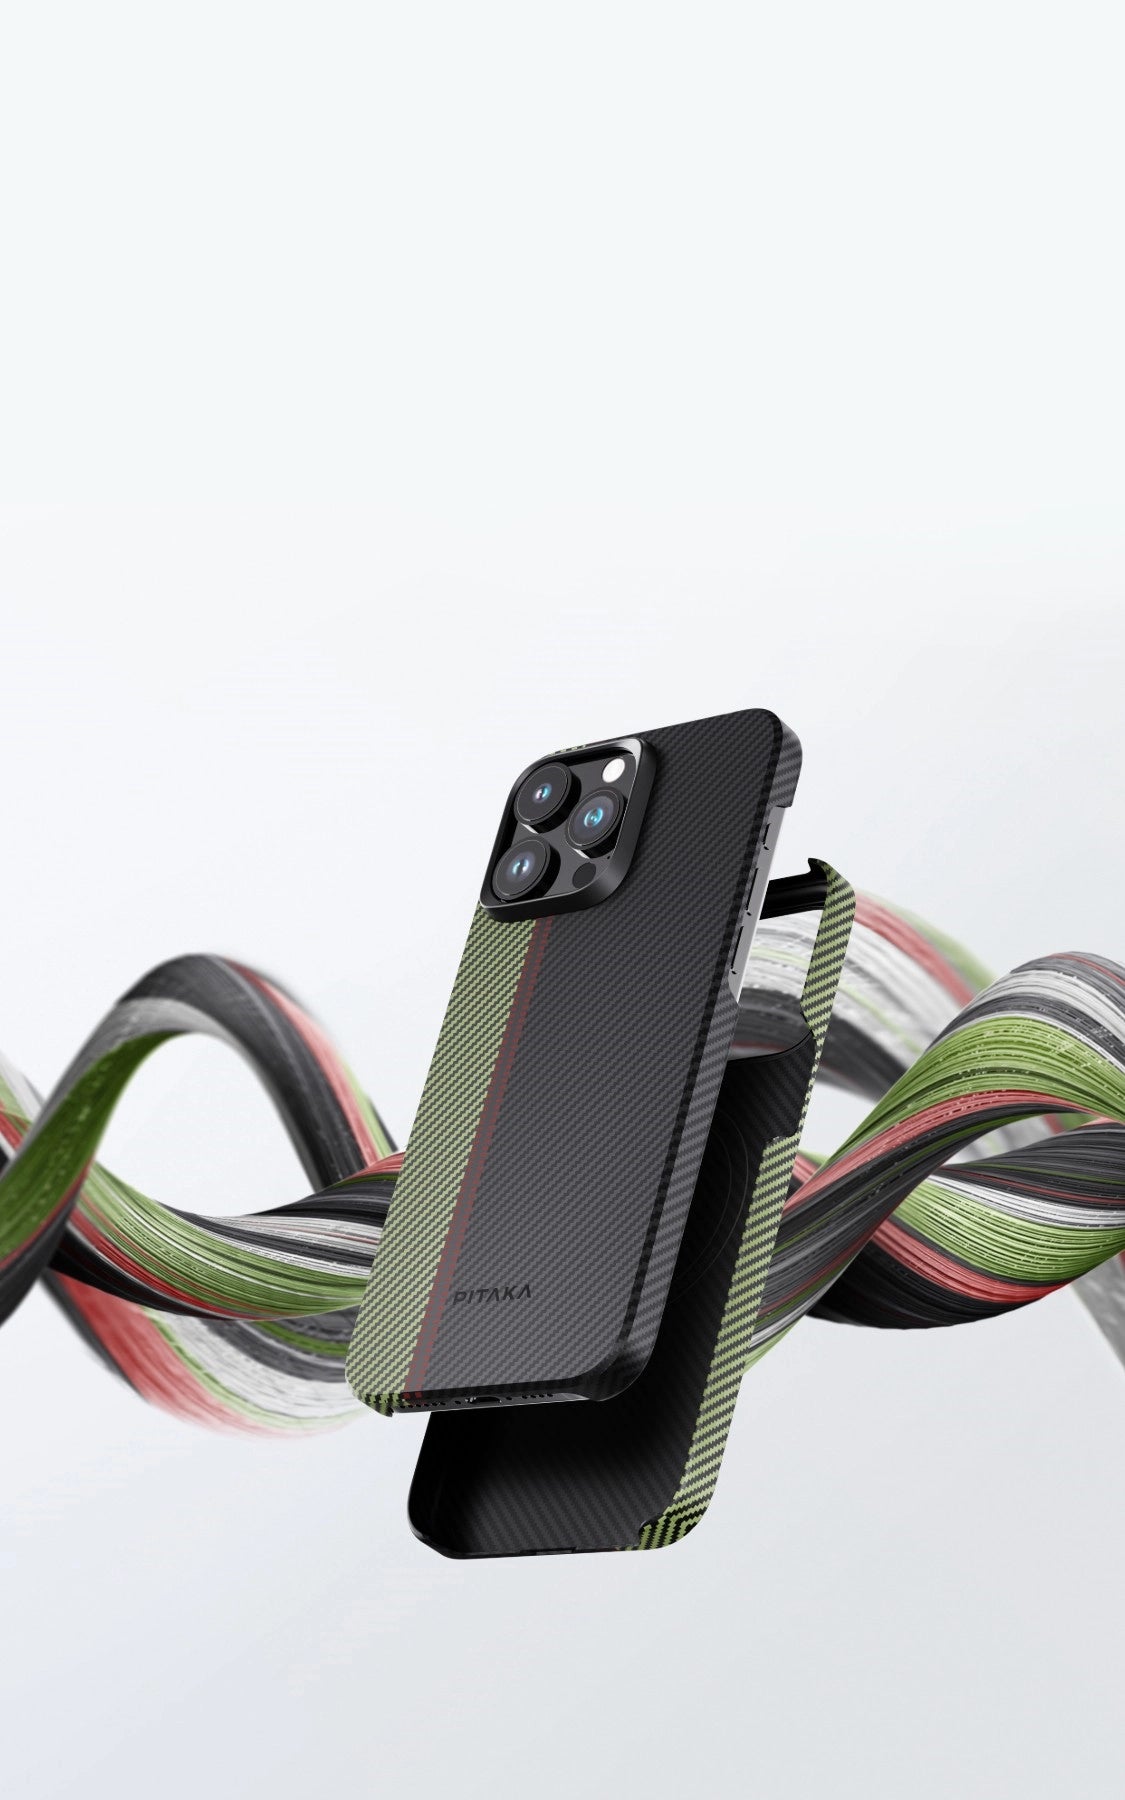 MagSafe対応の超軽量、超極薄iPhone 15用ケース – PITAKA Japan